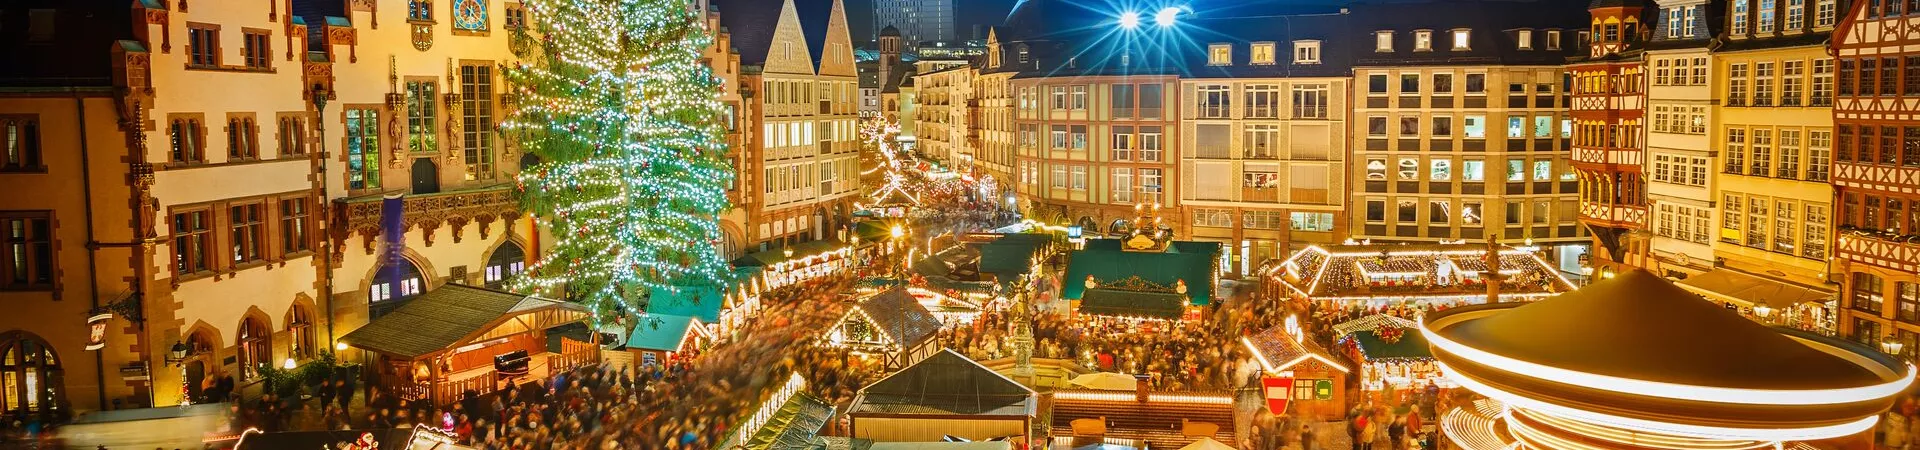 Large Christmas Market In Frankfurt 520625727 (TT)